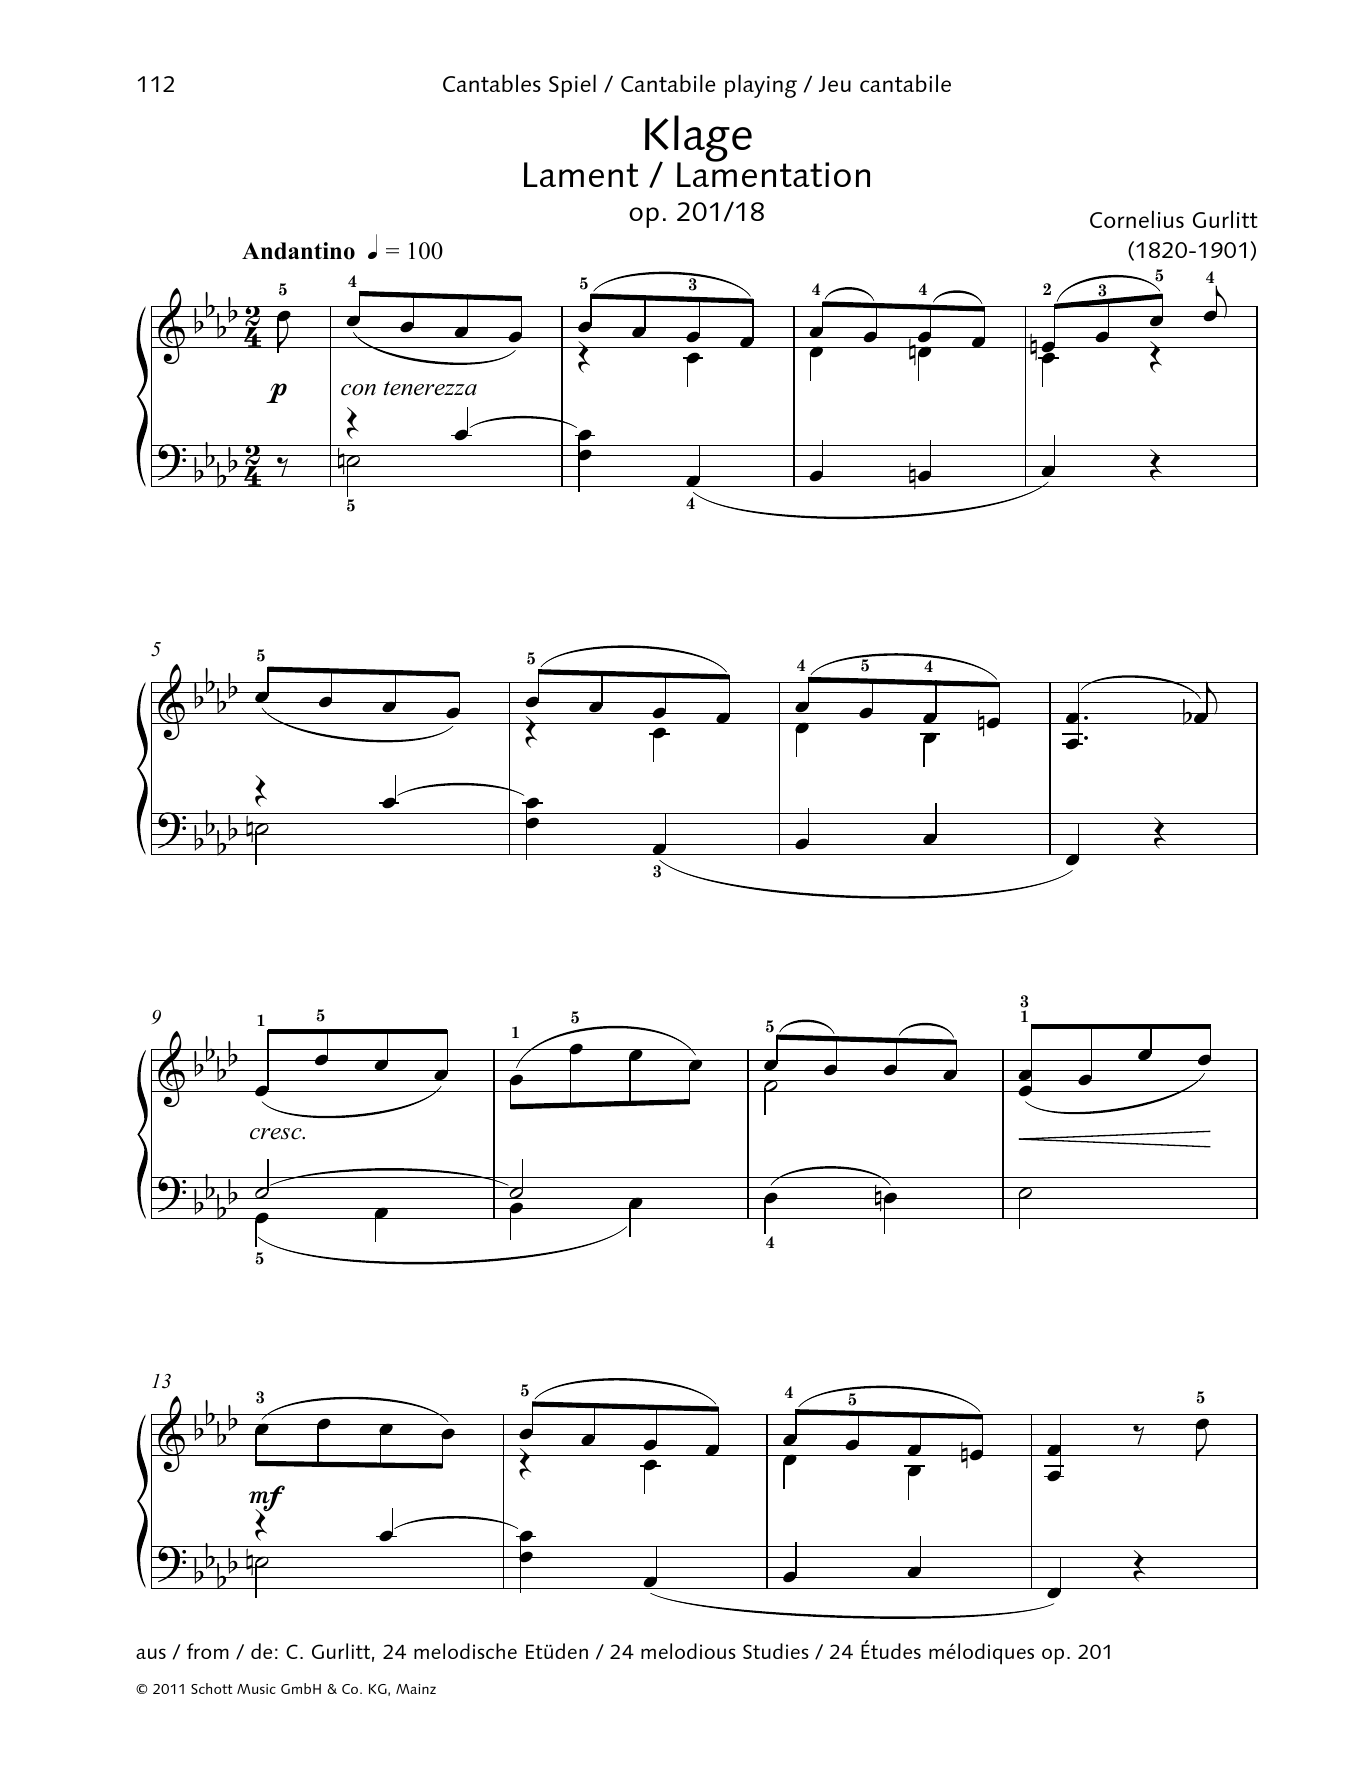 Cornelius Gurlitt Lament Sheet Music Notes & Chords for Piano Solo - Download or Print PDF